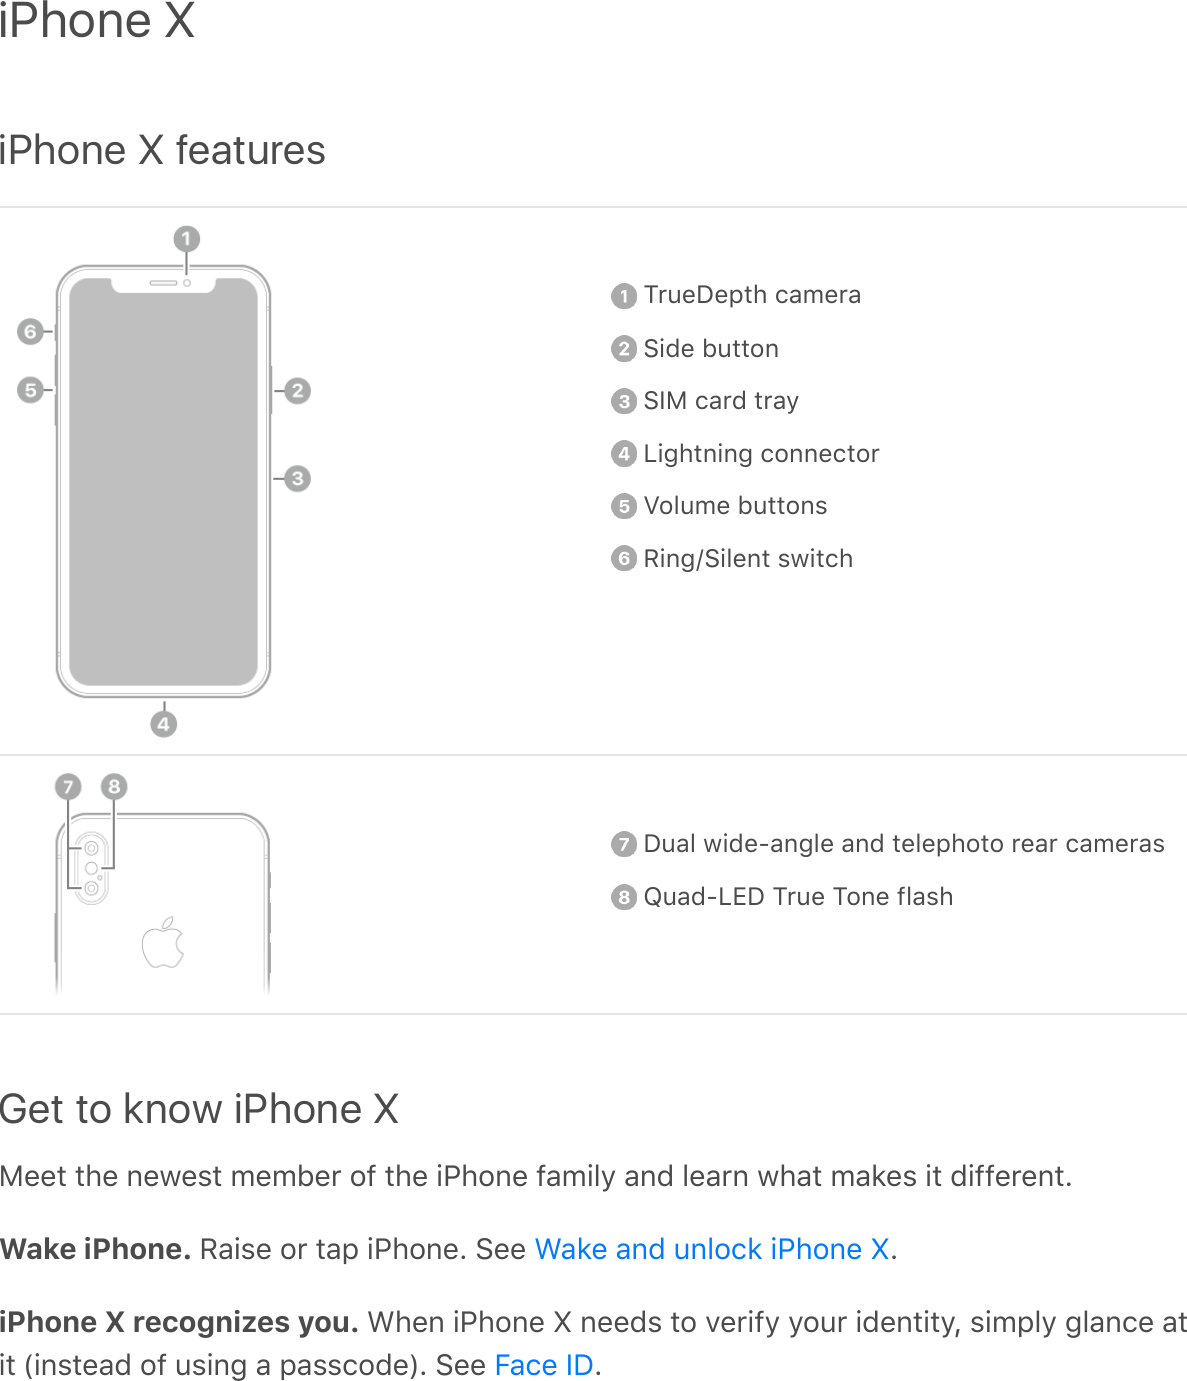 iPhone XiPhone X features&apos;&apos;&apos;?06&amp;&lt;&amp;;*#&apos;/-9&amp;0-&apos;:!C&amp;&apos;F6**$%&apos;:)H&apos;/-0C&apos;*0-&gt;&apos;D!4#*%!%4&apos;/$%%&amp;/*$0&apos;Z$.69&amp;&apos;F6**$%,&apos;I!%4[:!.&amp;%*&apos;,3!*/#&apos;&apos;&apos;&lt;6-.&apos;3!C&amp;8-%4.&amp;&apos;-%C&apos;*&amp;.&amp;;#$*$&apos;0&amp;-0&apos;/-9&amp;0-,&apos;K6-C8DX&lt;&apos;?06&amp;&apos;?$%&amp;&apos;7.-,#Get to know iPhone XH&amp;&amp;*&apos;*#&amp;&apos;%&amp;3&amp;,*&apos;9&amp;9F&amp;0&apos;$7&apos;*#&amp;&apos;!&quot;#$%&amp;&apos;7-9!.&gt;&apos;-%C&apos;.&amp;-0%&apos;3#-*&apos;9-2&amp;,&apos;!*&apos;C!77&amp;0&amp;%*GWake iPhone. I-!,&amp;&apos;$0&apos;*-;&apos;!&quot;#$%&amp;G&apos;:&amp;&amp;&apos; GiPhone X recognizes you. L#&amp;%&apos;!&quot;#$%&amp;&apos;(&apos;%&amp;&amp;C,&apos;*$&apos;A&amp;0!7&gt;&apos;&gt;$60&apos;!C&amp;%*!*&gt;Q&apos;,!9;.&gt;&apos;4.-%/&amp;&apos;-*!*&apos;\!%,*&amp;-C&apos;$7&apos;6,!%4&apos;-&apos;;-,,/$C&amp;]G&apos;:&amp;&amp;&apos; GL-2&amp;&apos;-%C&apos;6%.$/2&apos;!&quot;#$%&amp;&apos;(5-/&amp;&apos;)&lt;